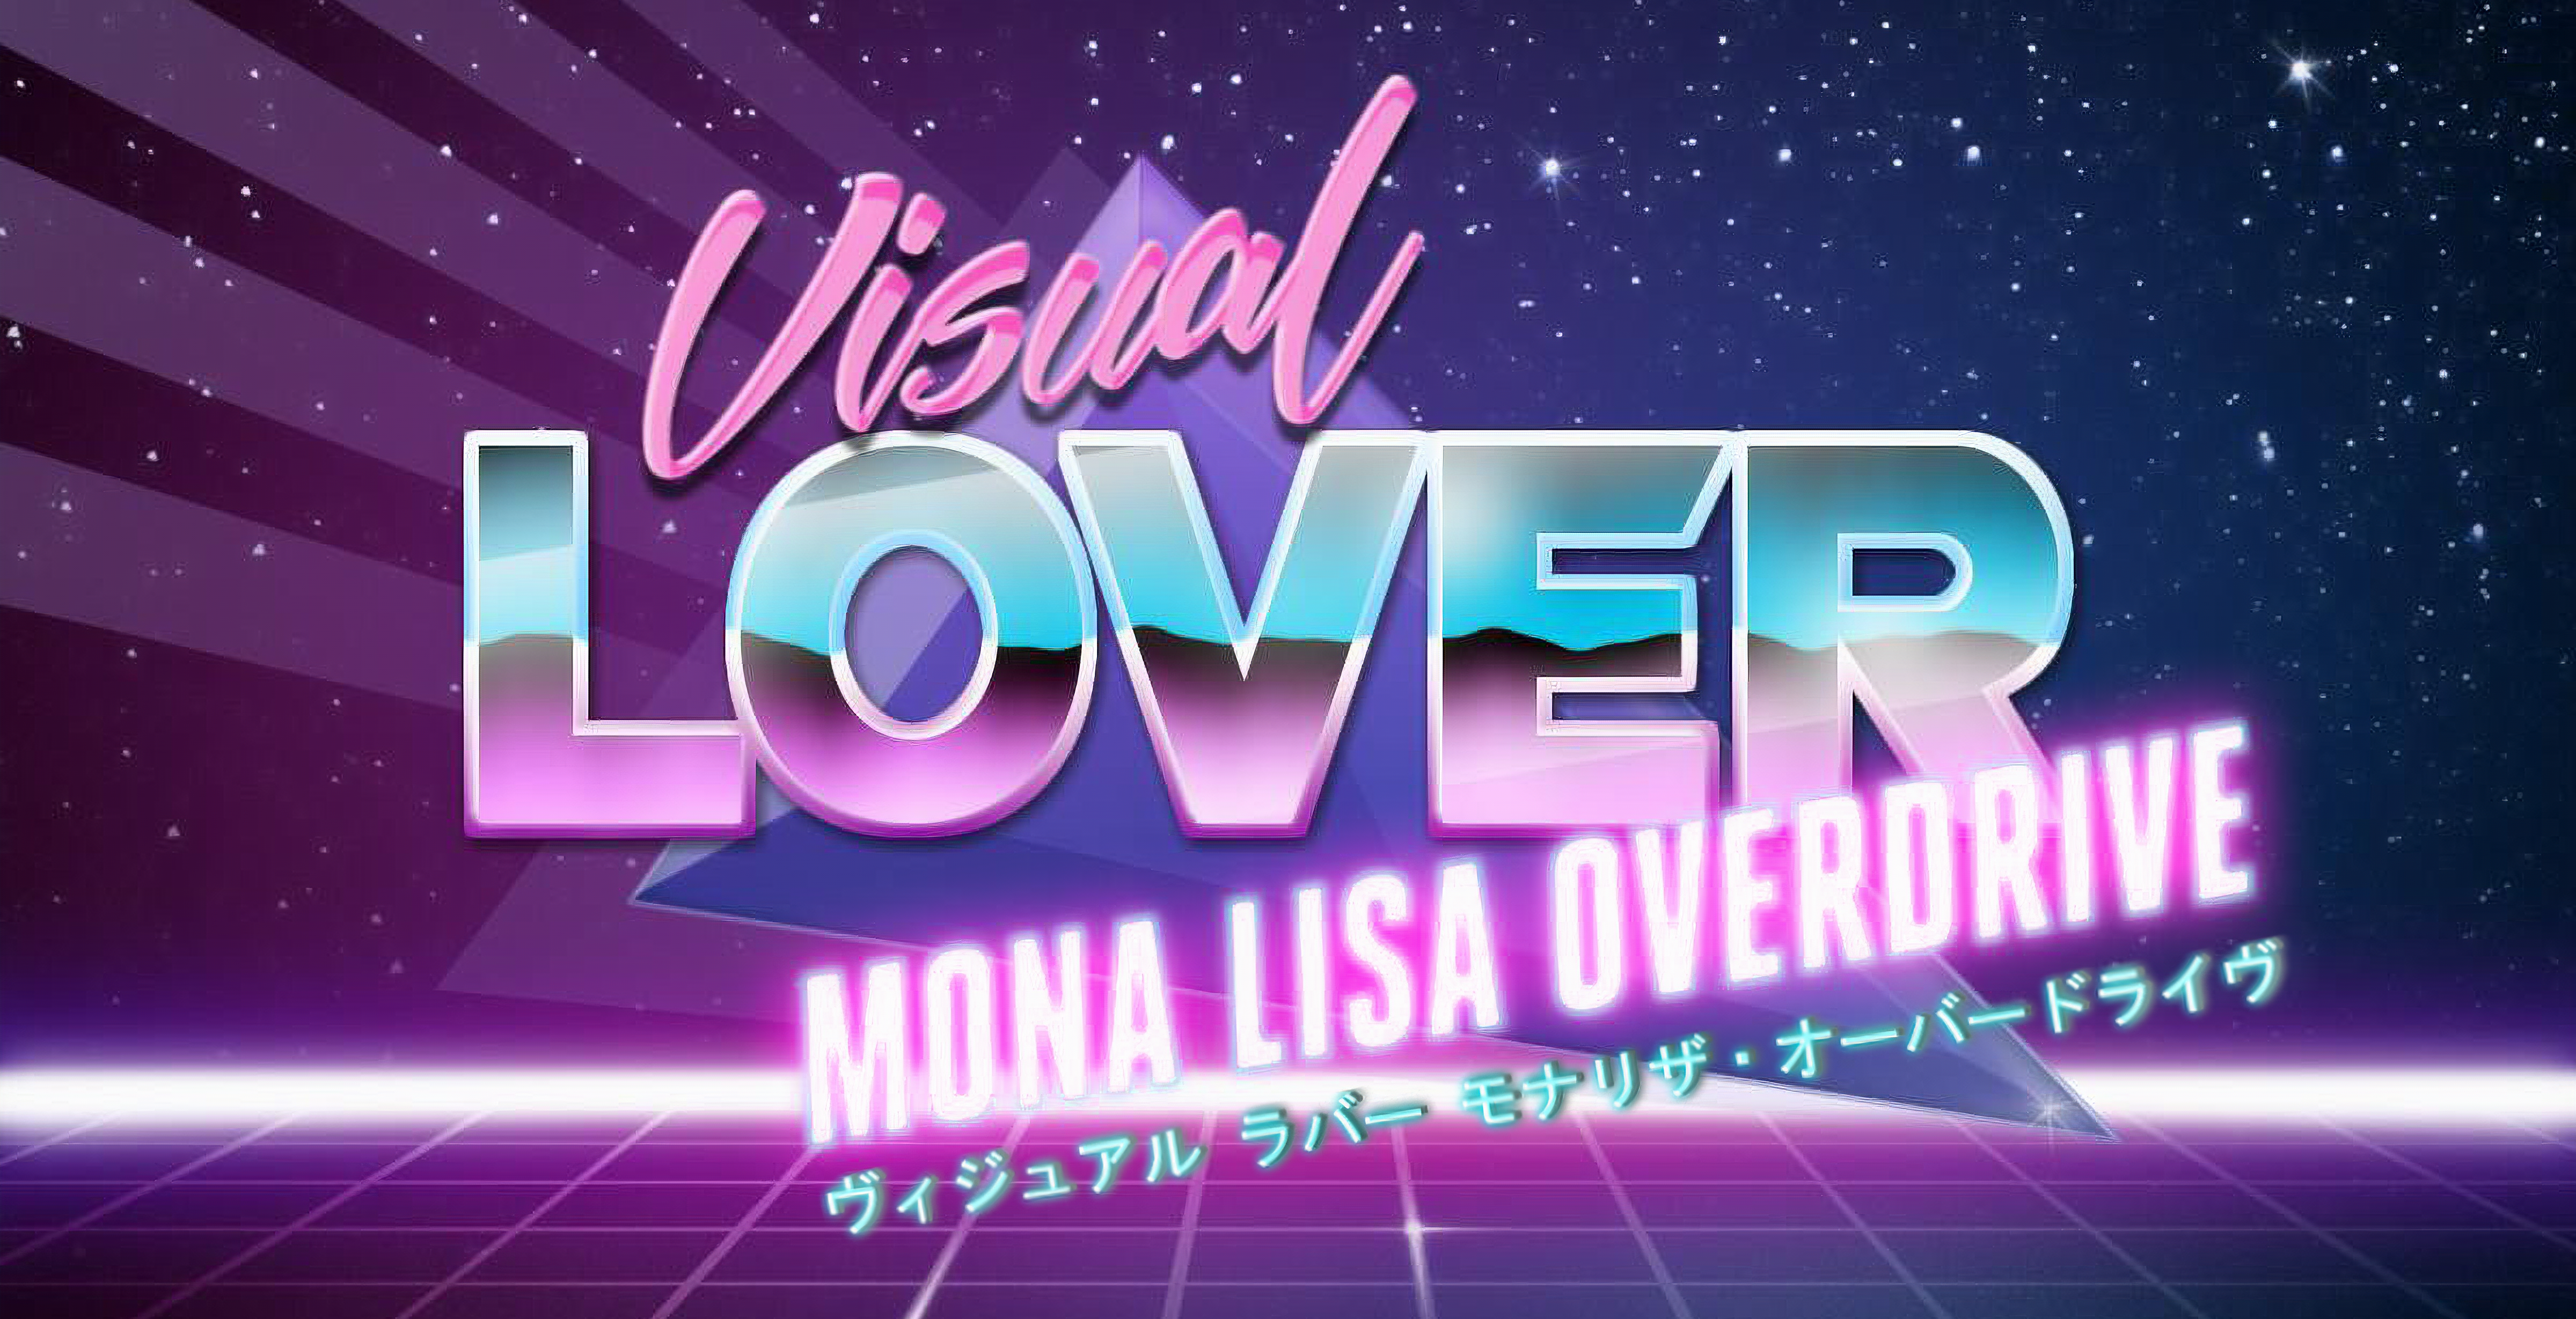 Visual Lover: Mona Lisa Overdrive